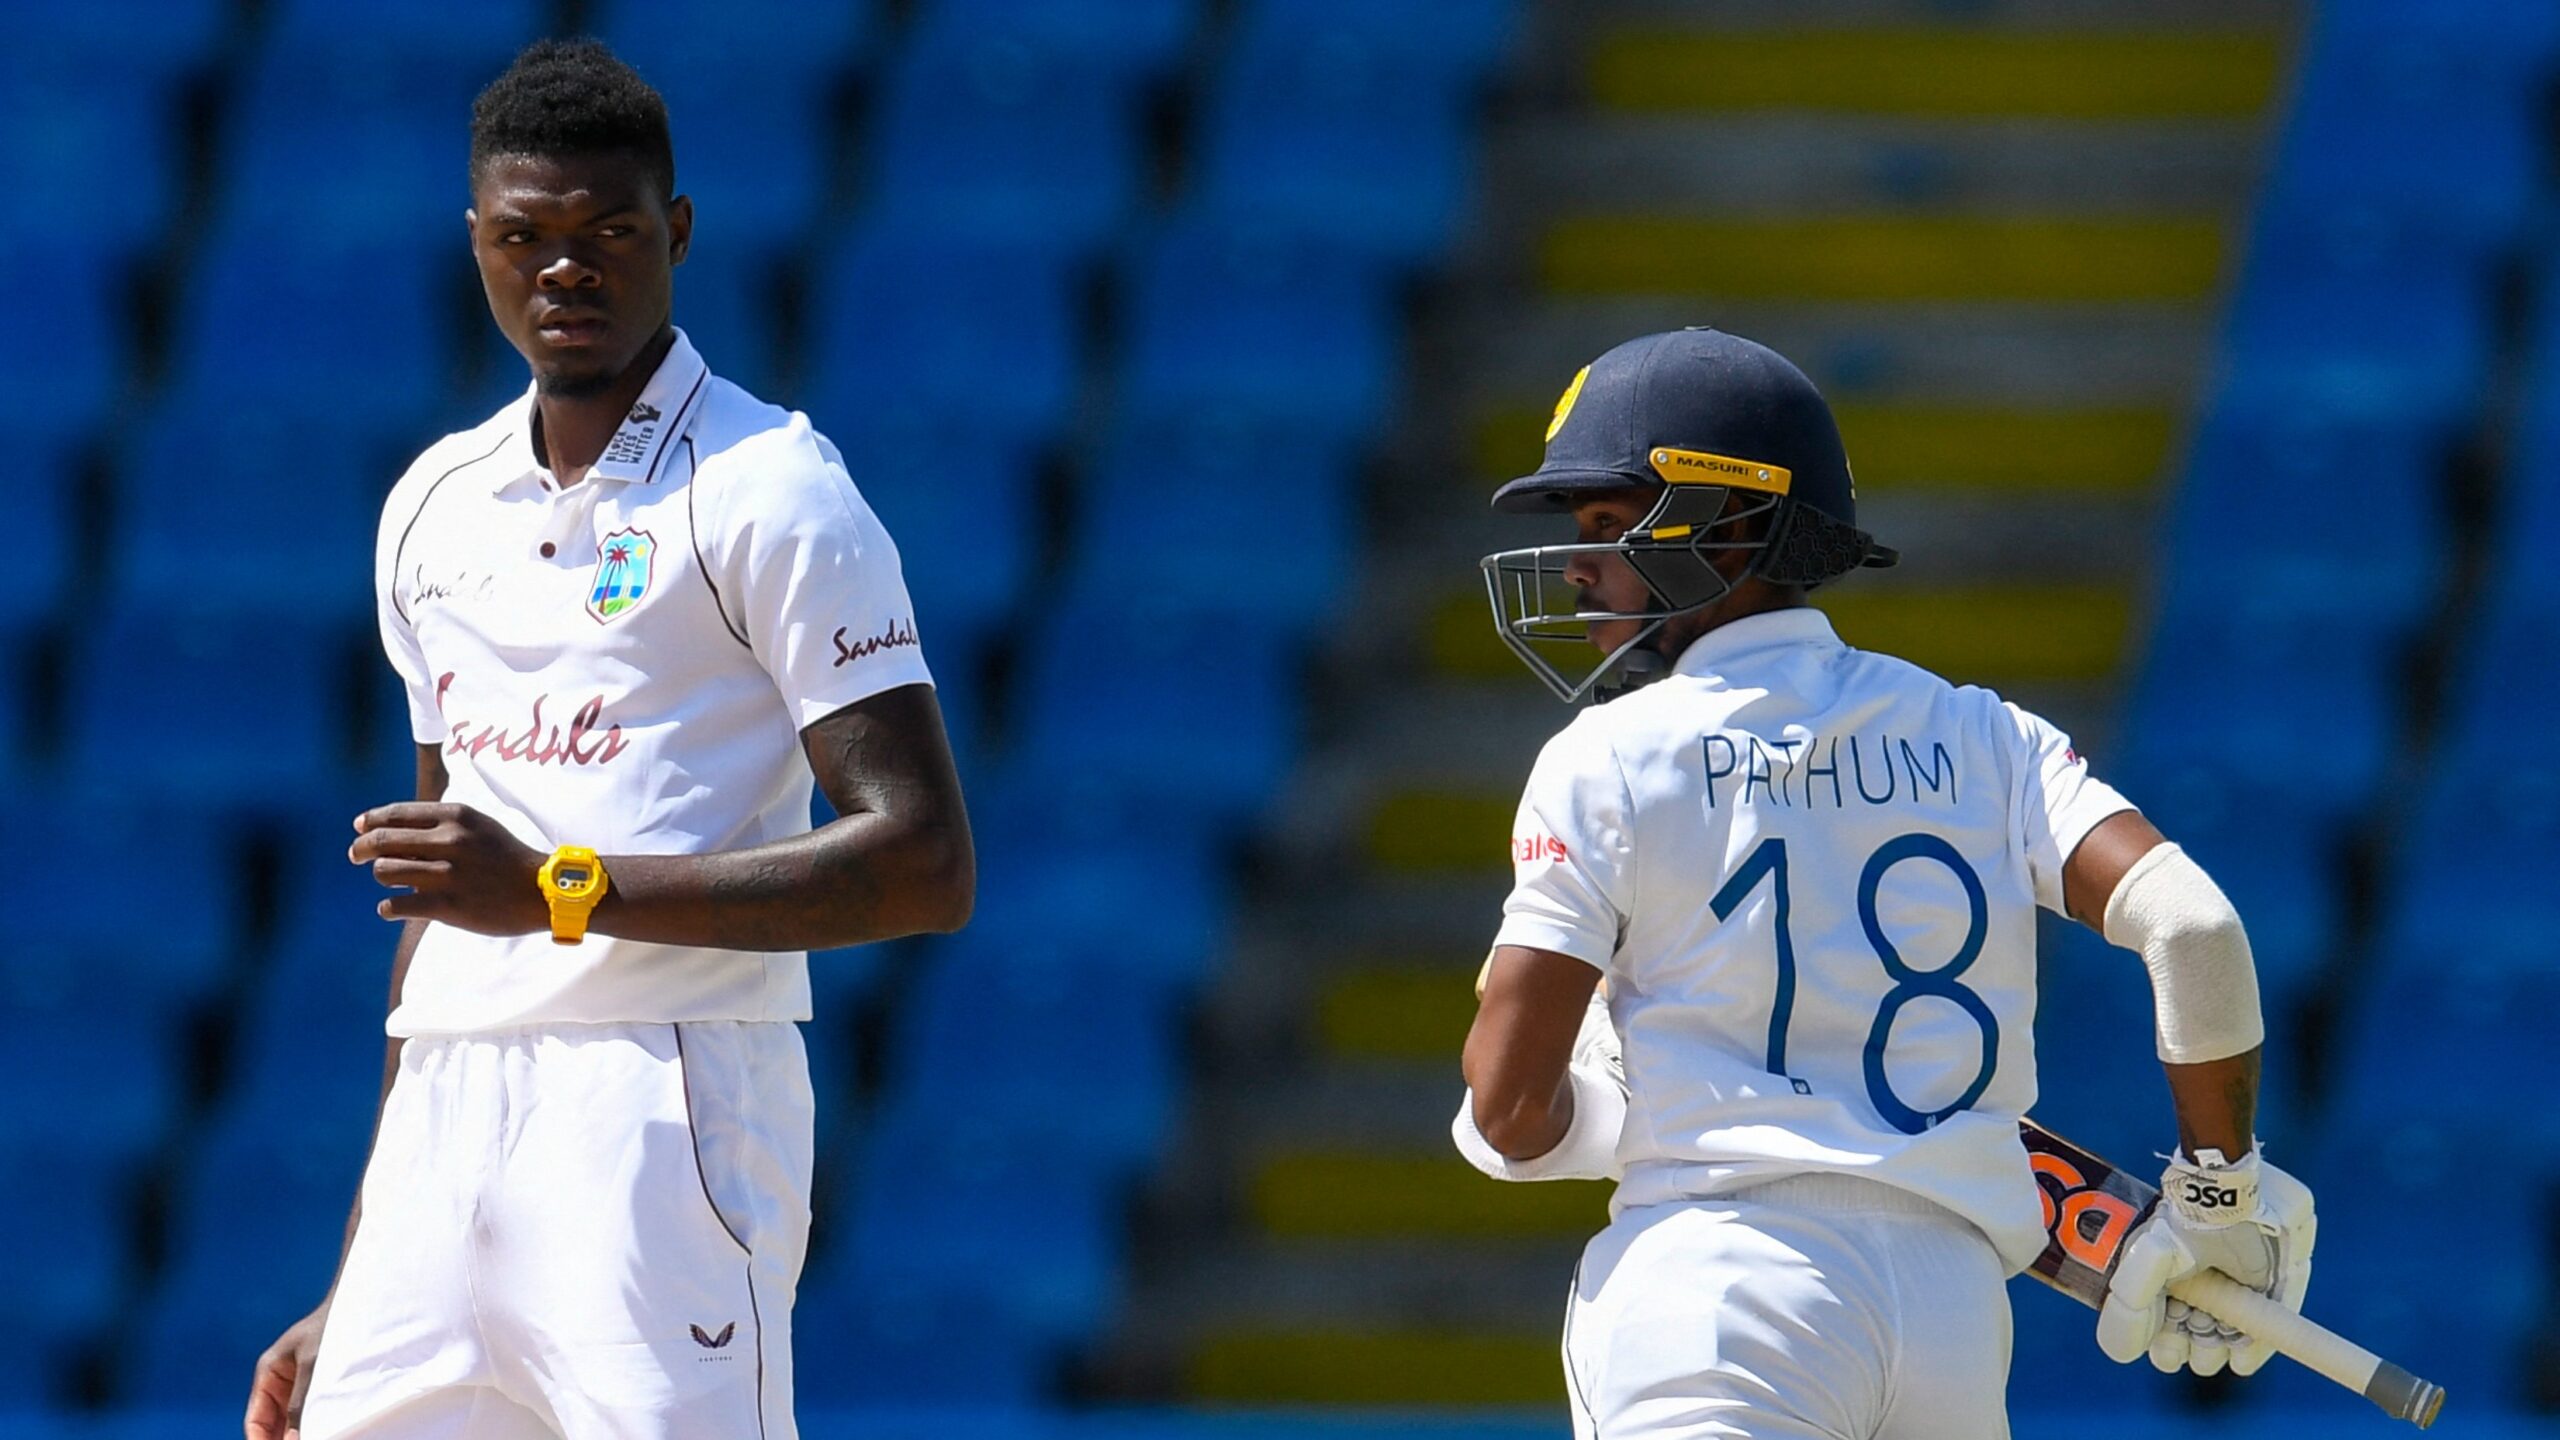 West Indies vs Sri Lanka 2021, 1st Test: Day 4 - Sri Lanka Set 375 Runs Target For West Indies, Hosts End The Day On 34/1